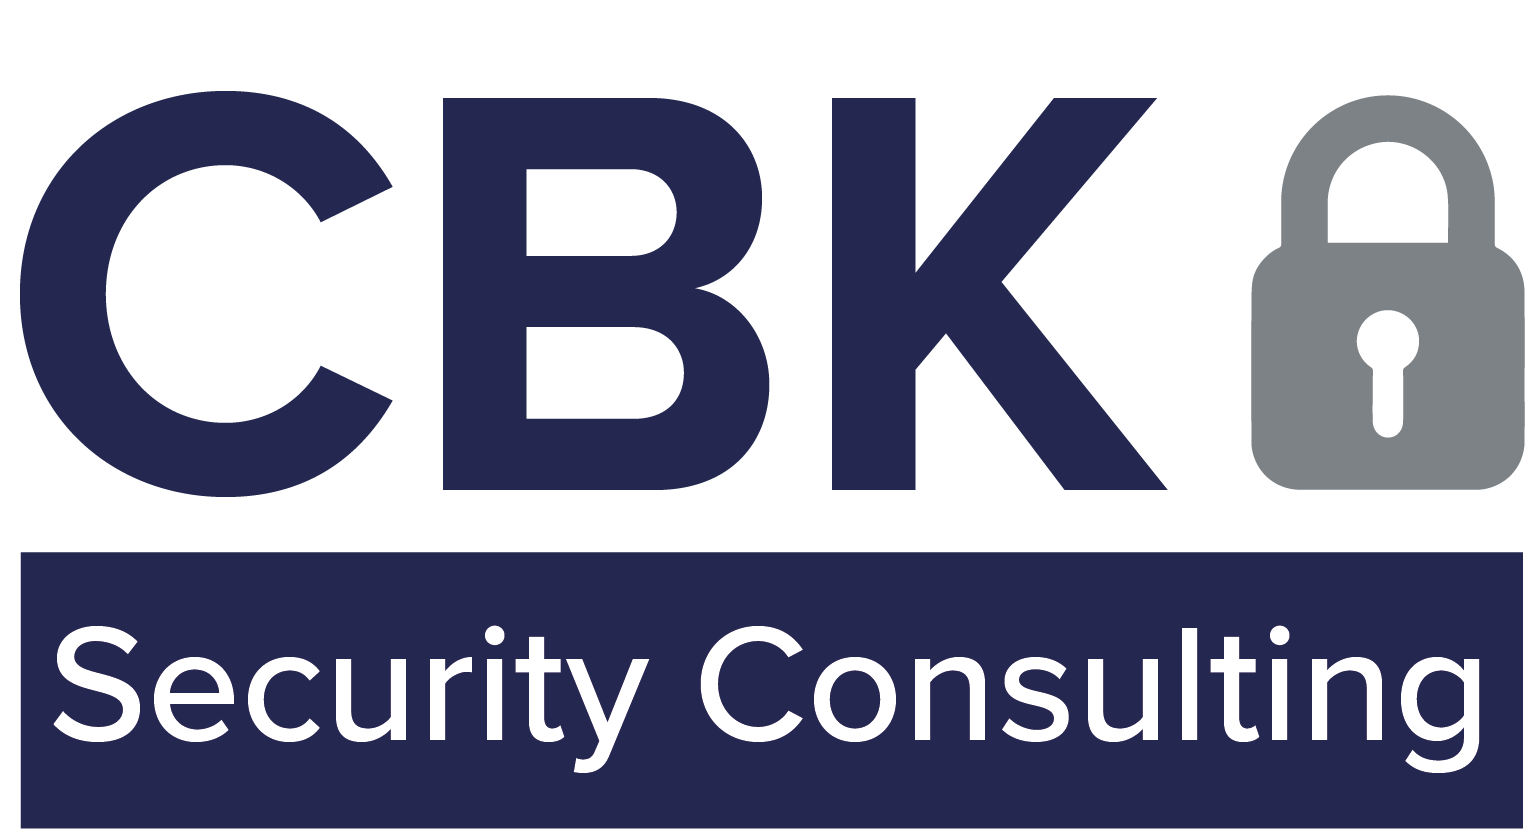 CBK Security Consulting